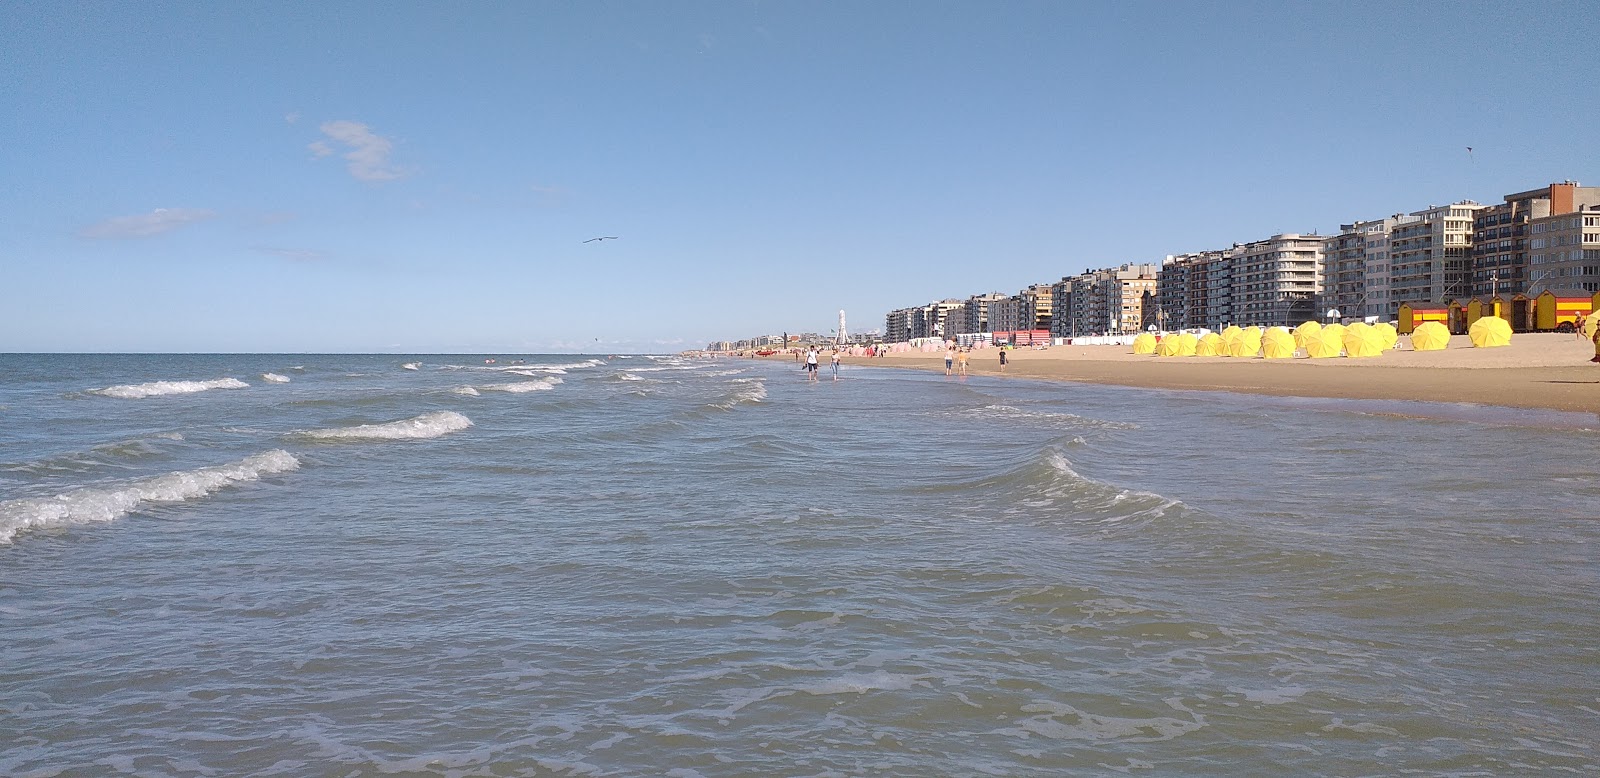 Foto av De Panne Strand strandortområde